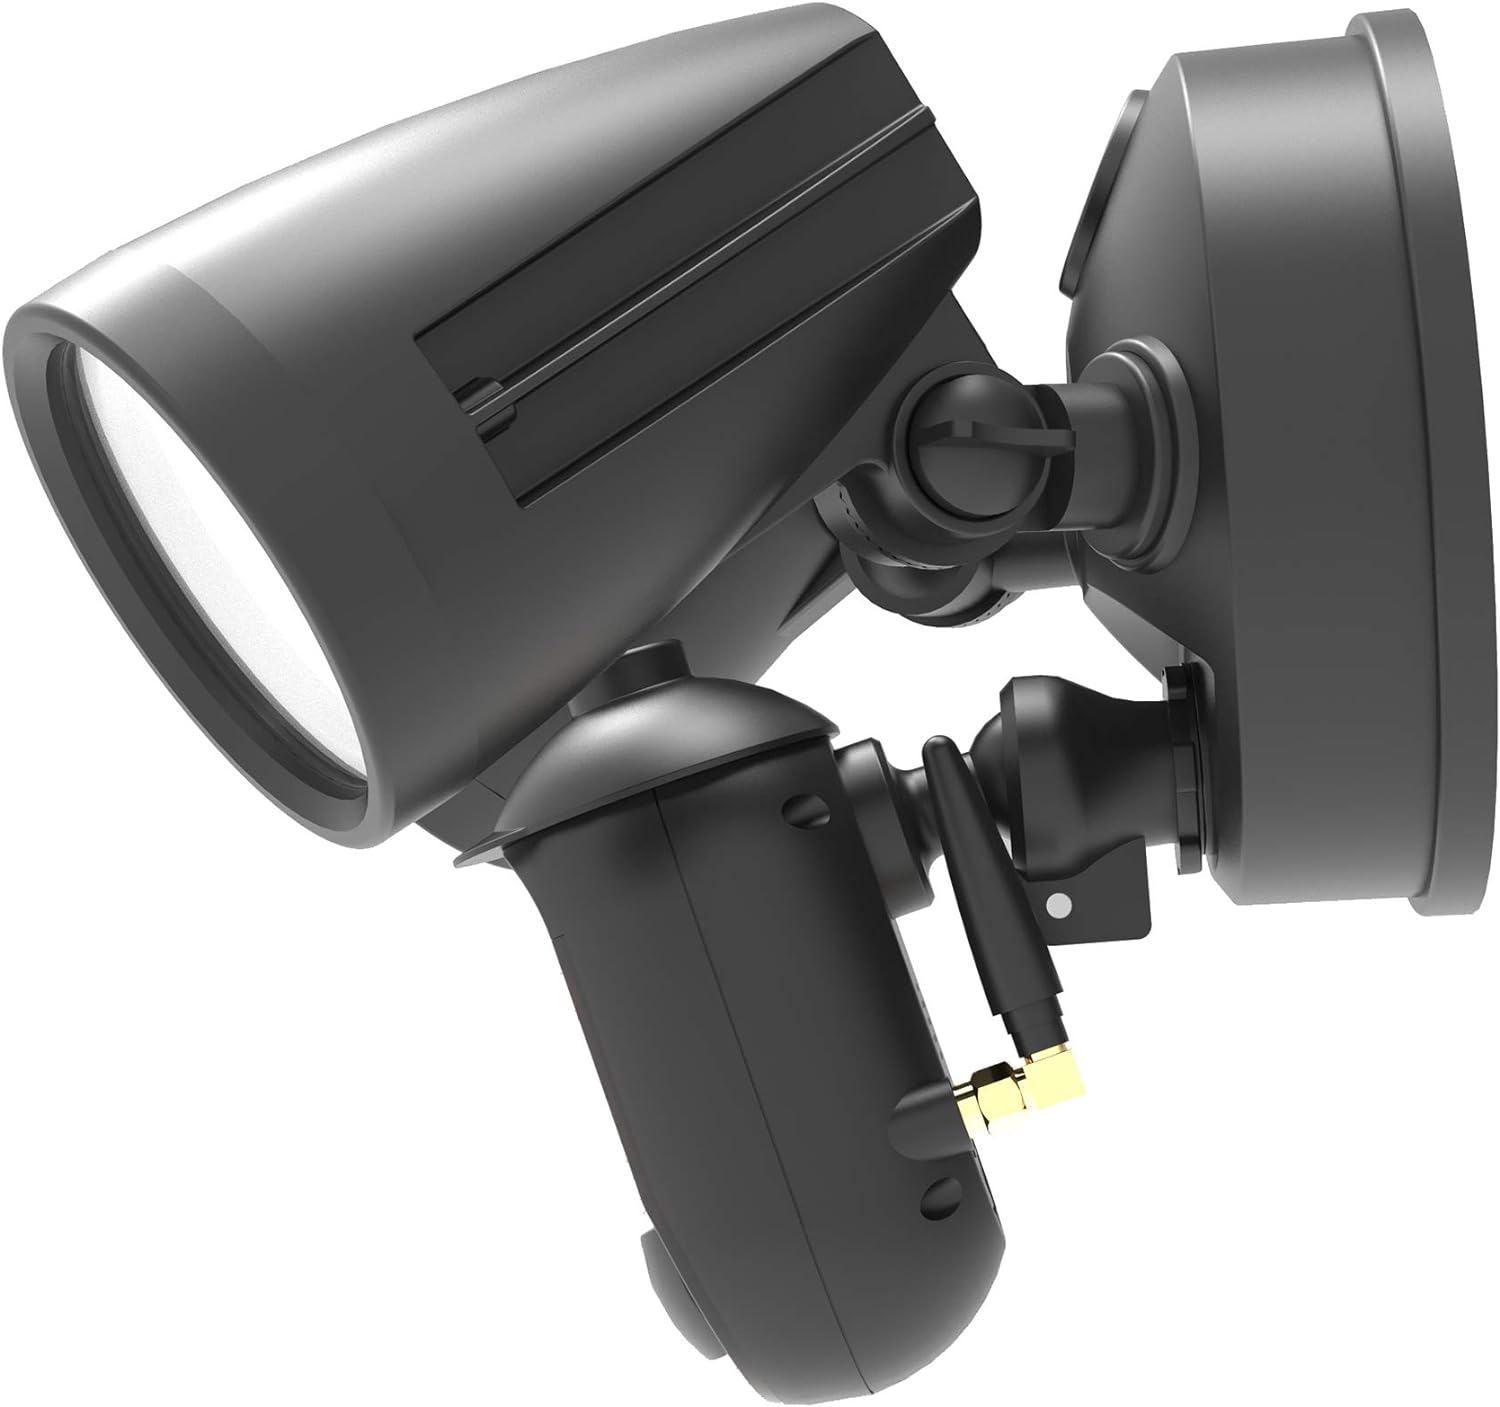 Teetsie Floodlight Camera - $60